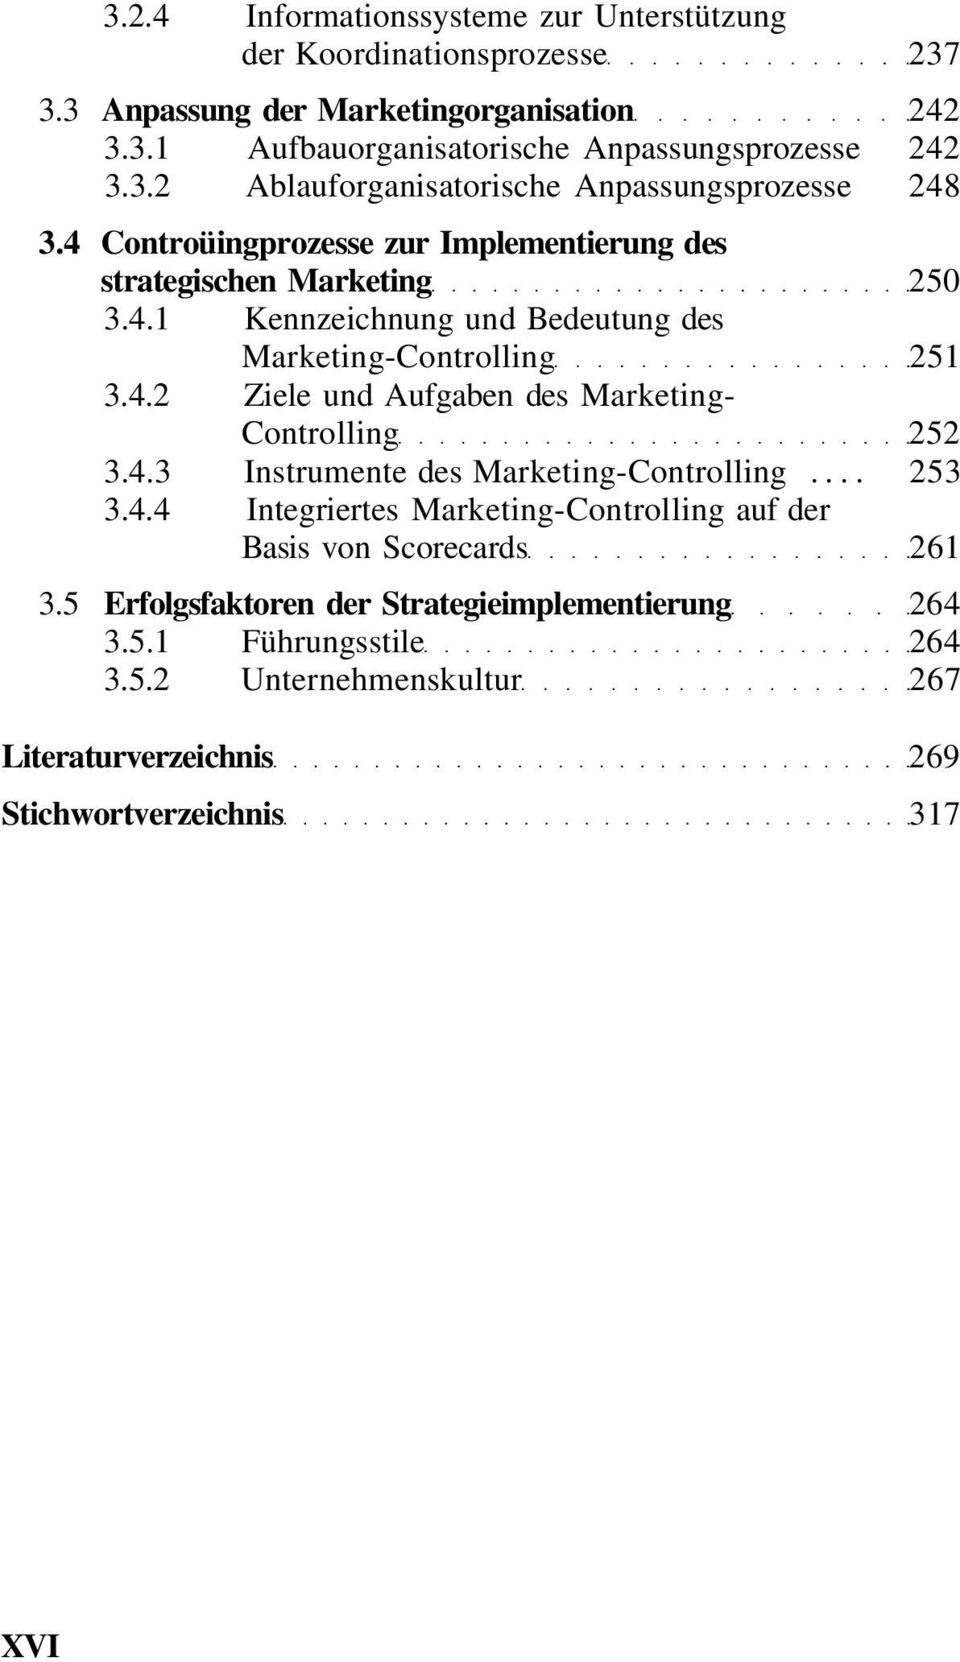 4.3 Instrumente des Marketing-Controlling... 253 3.4.4 Integriertes Marketing-Controlling auf der Basis von Scorecards 261 3.